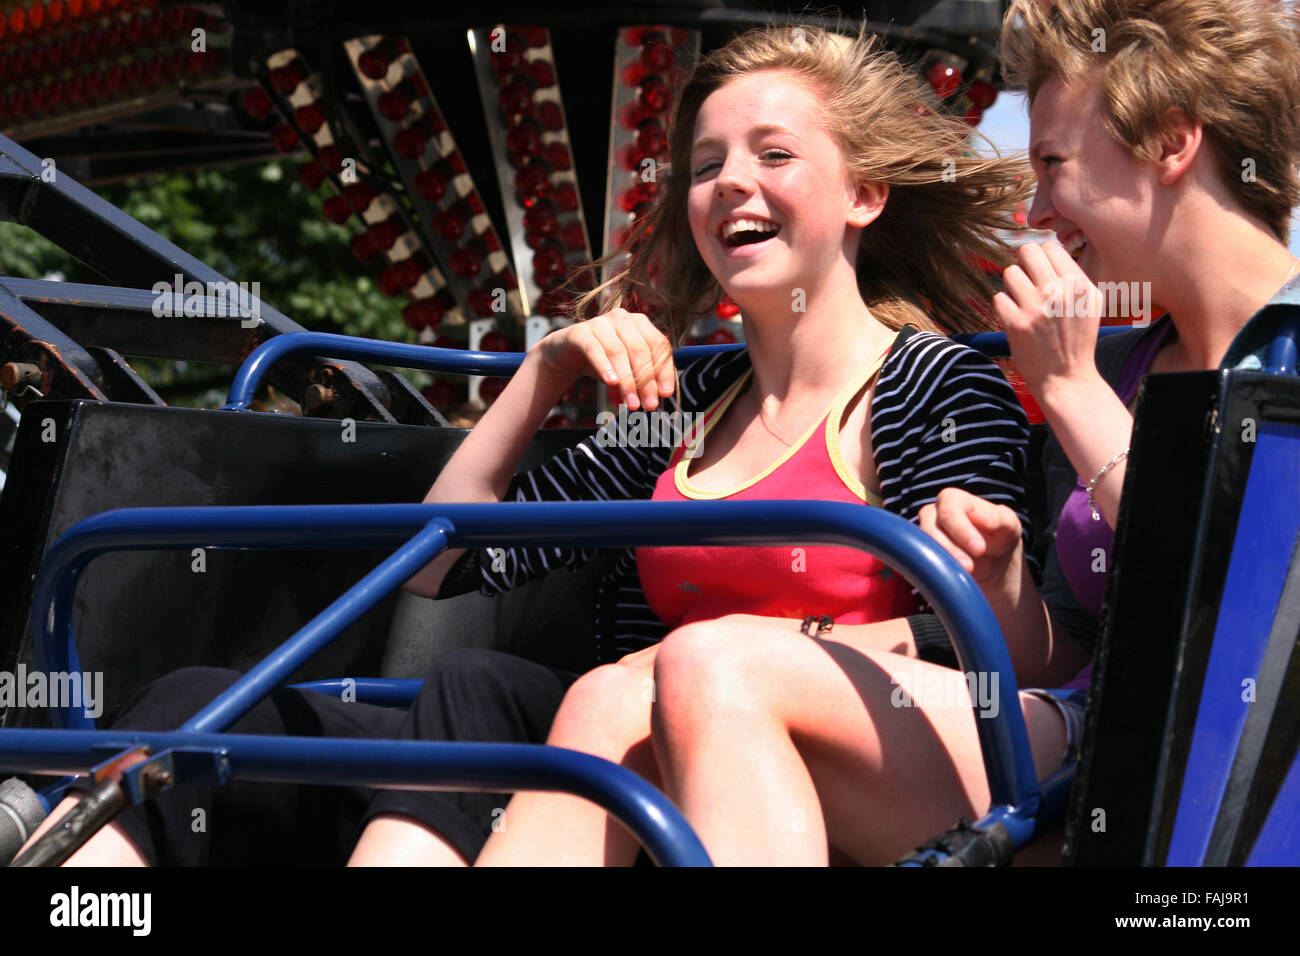 Girls enjoying fairground ride. Stock Photo